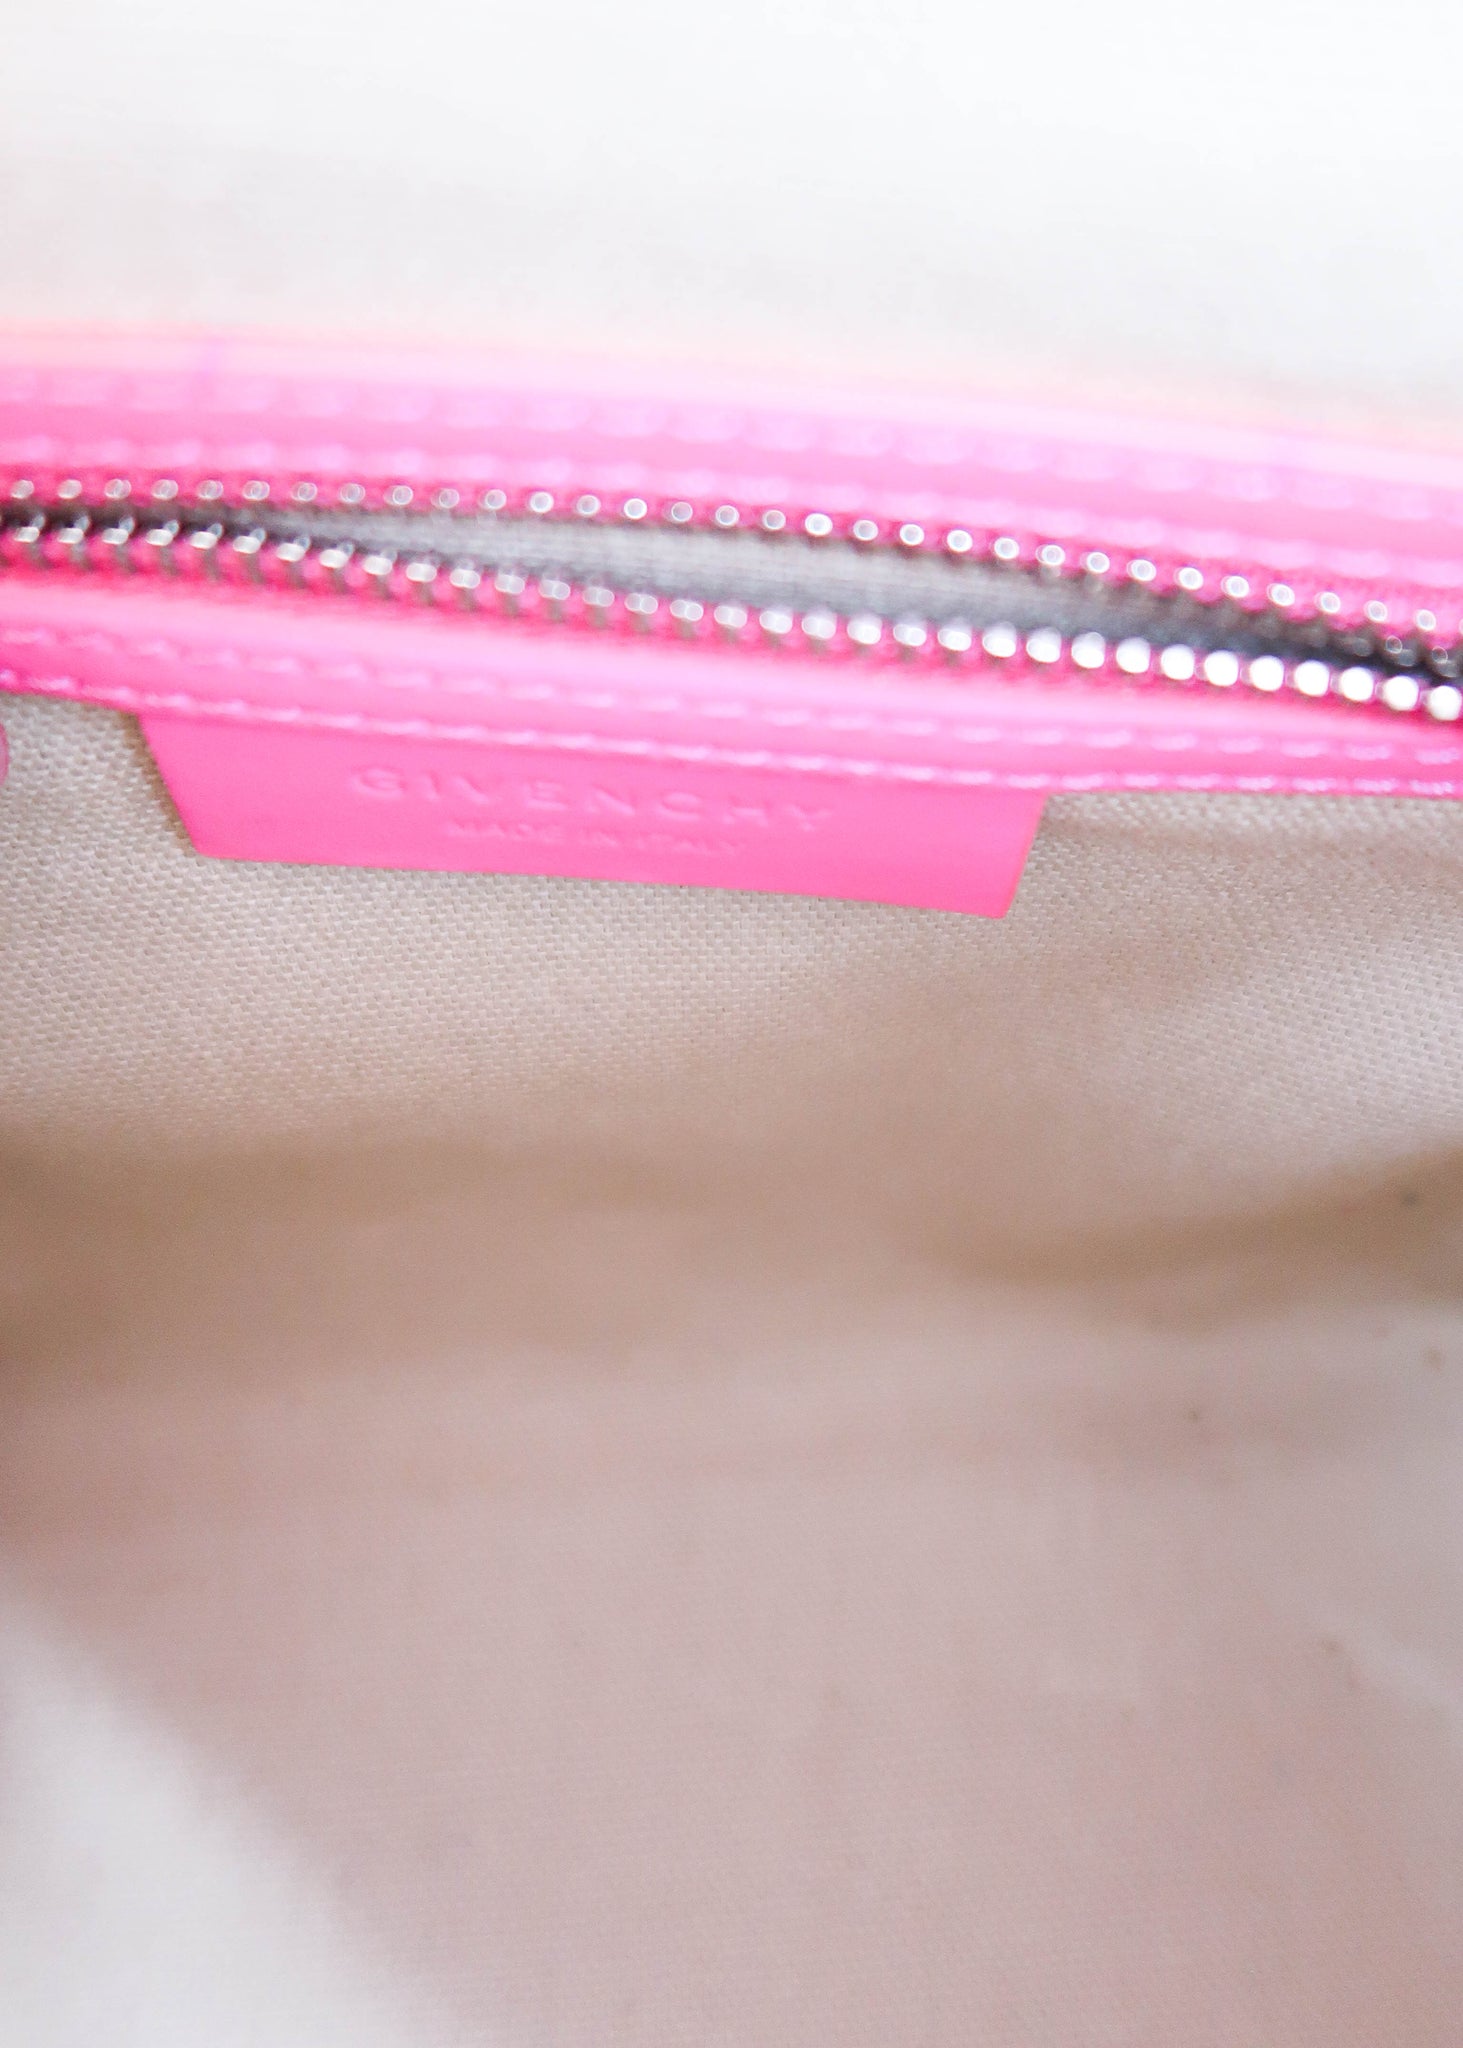 Givenchy Shiny Lord Calfskin Mini Antigona Neon Pink